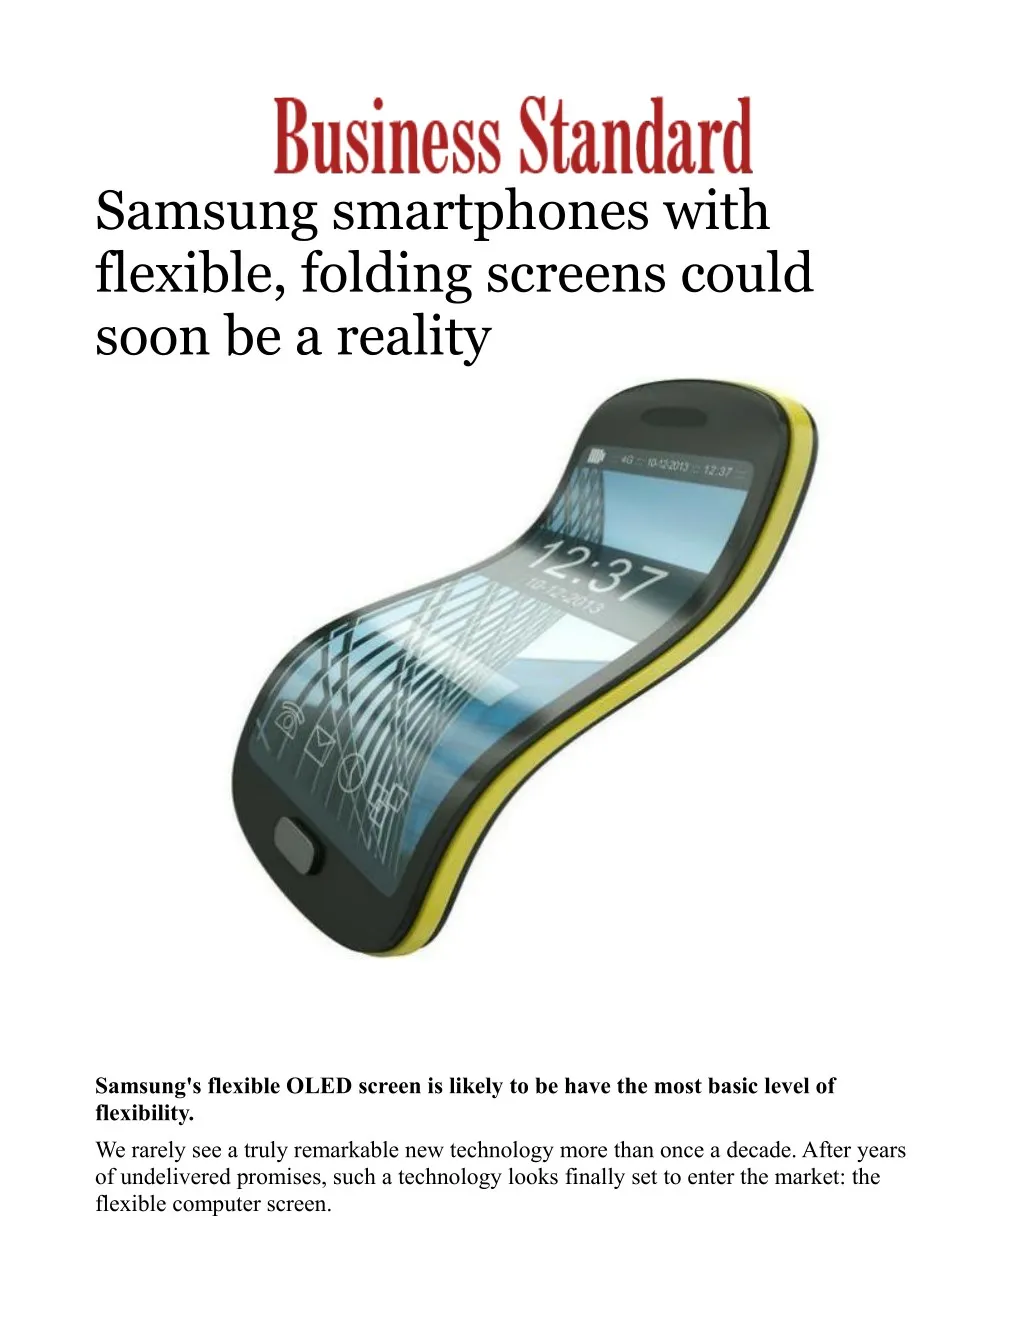 samsung smartphones with flexible folding screens